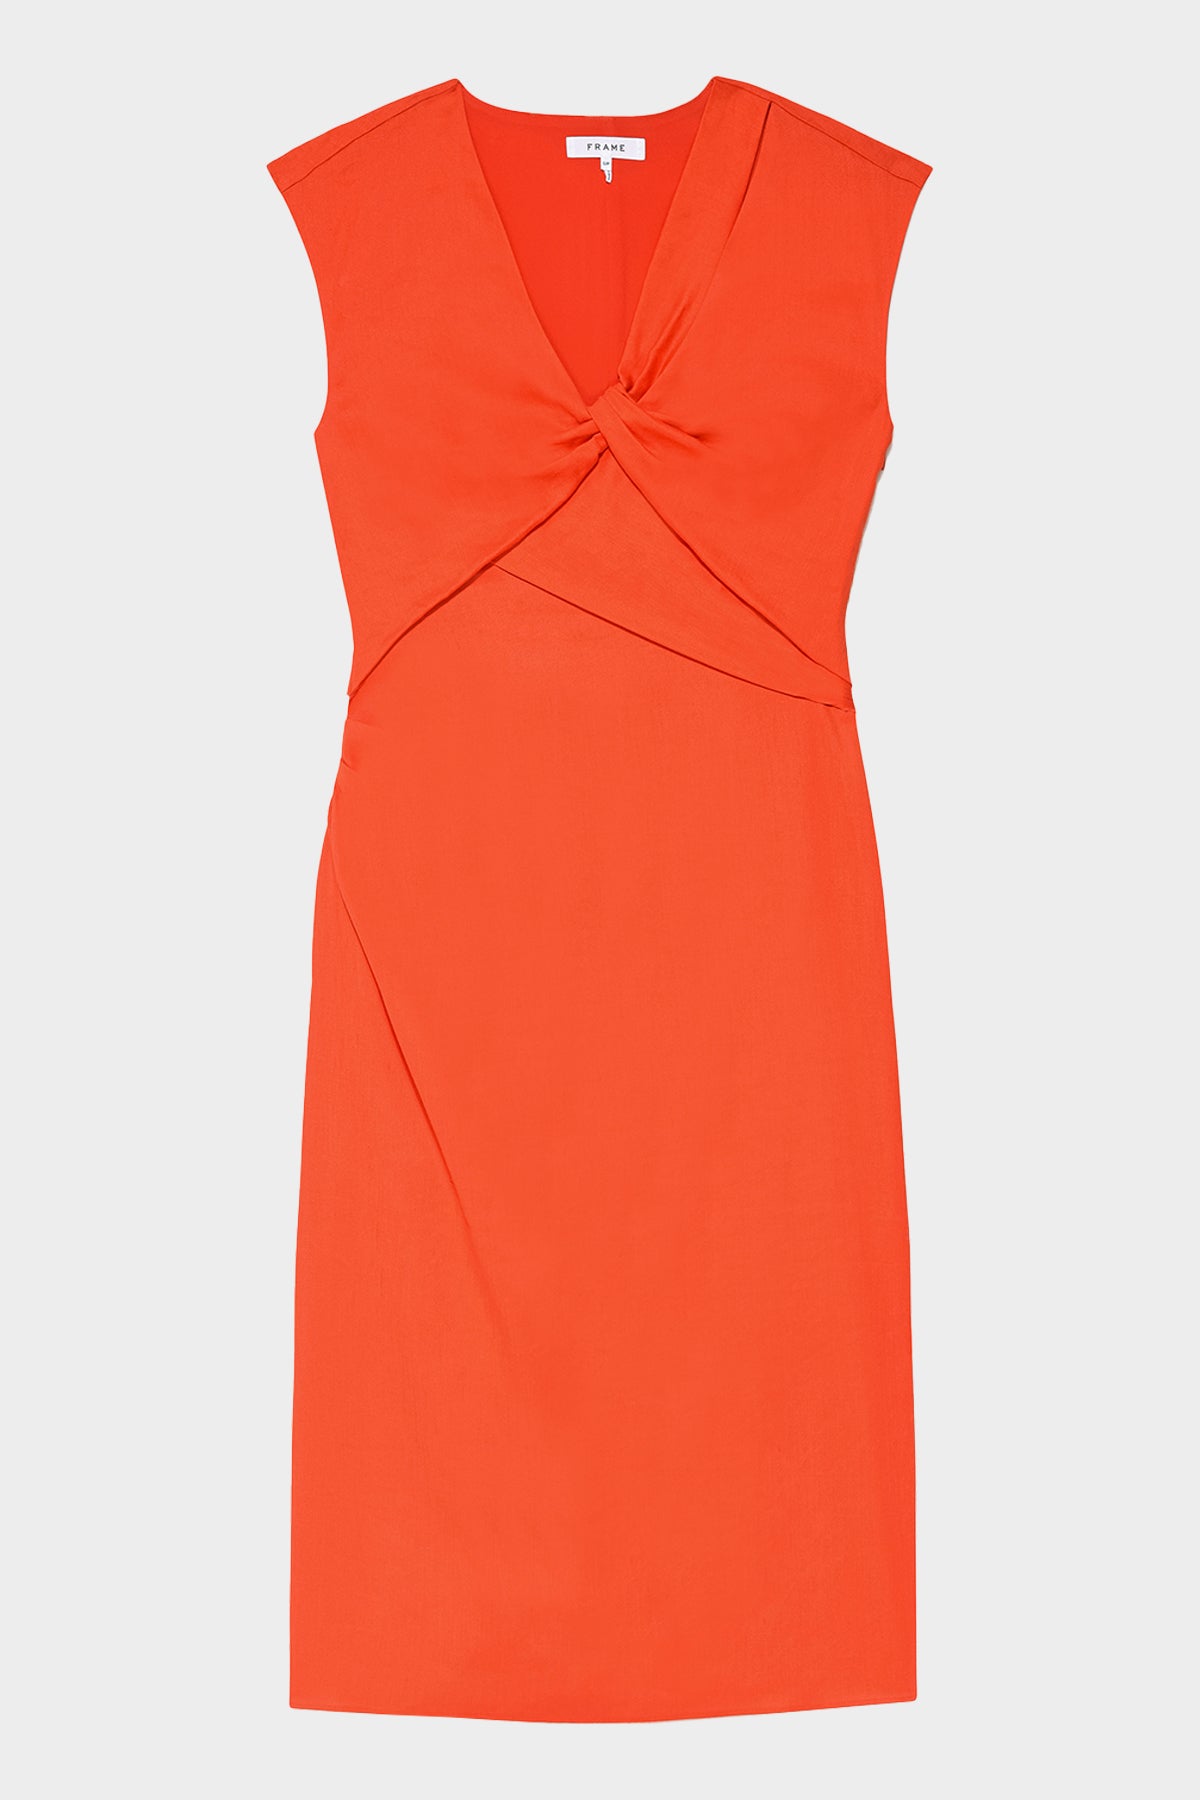 Twist Front Sleeveless Dress in Red Orange - shop-olivia.com